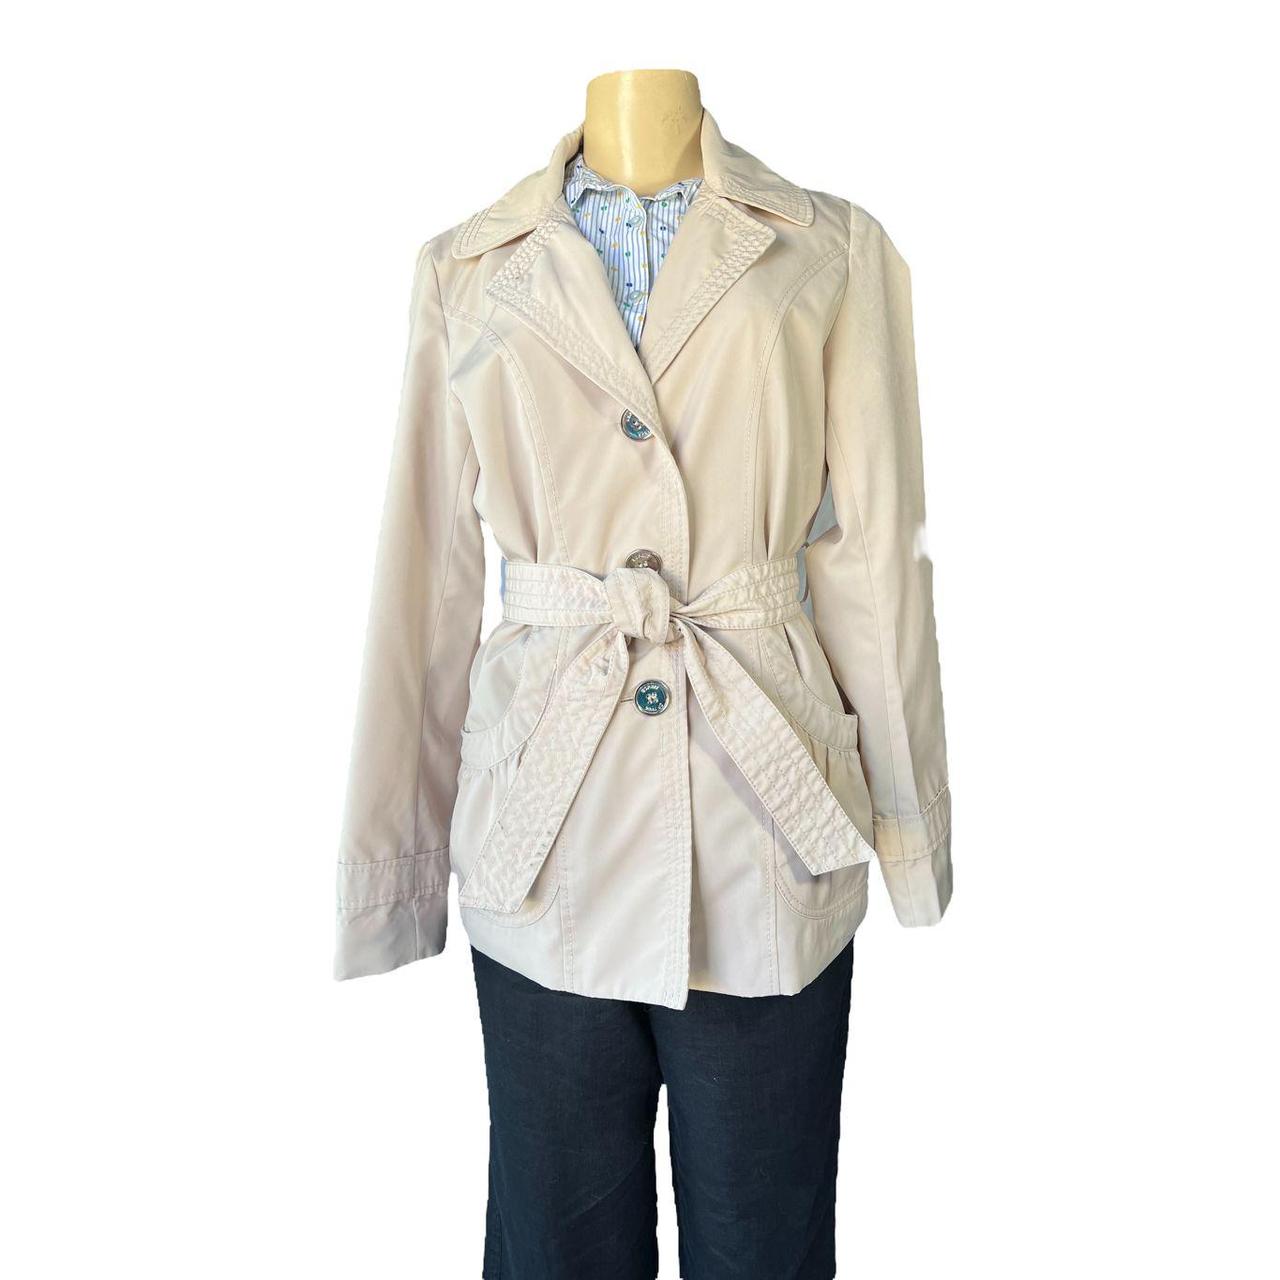 Classic vintage, waterproof, short trench coat by... - Depop